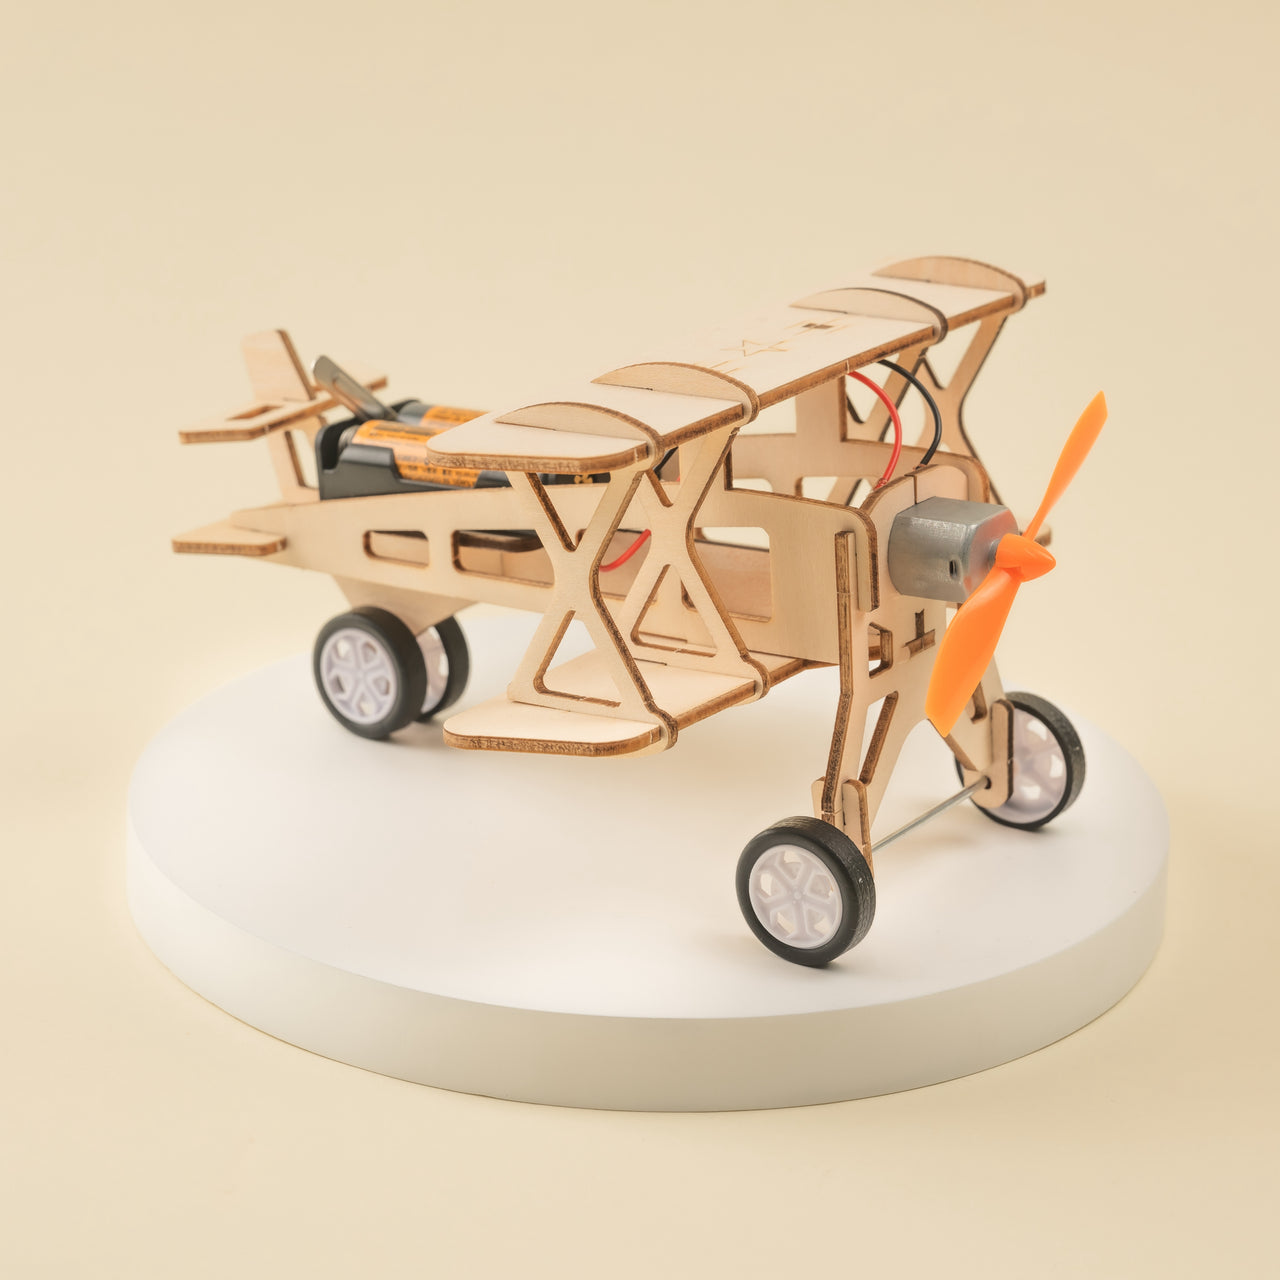 Kit de bricolage d'avion CreateKit